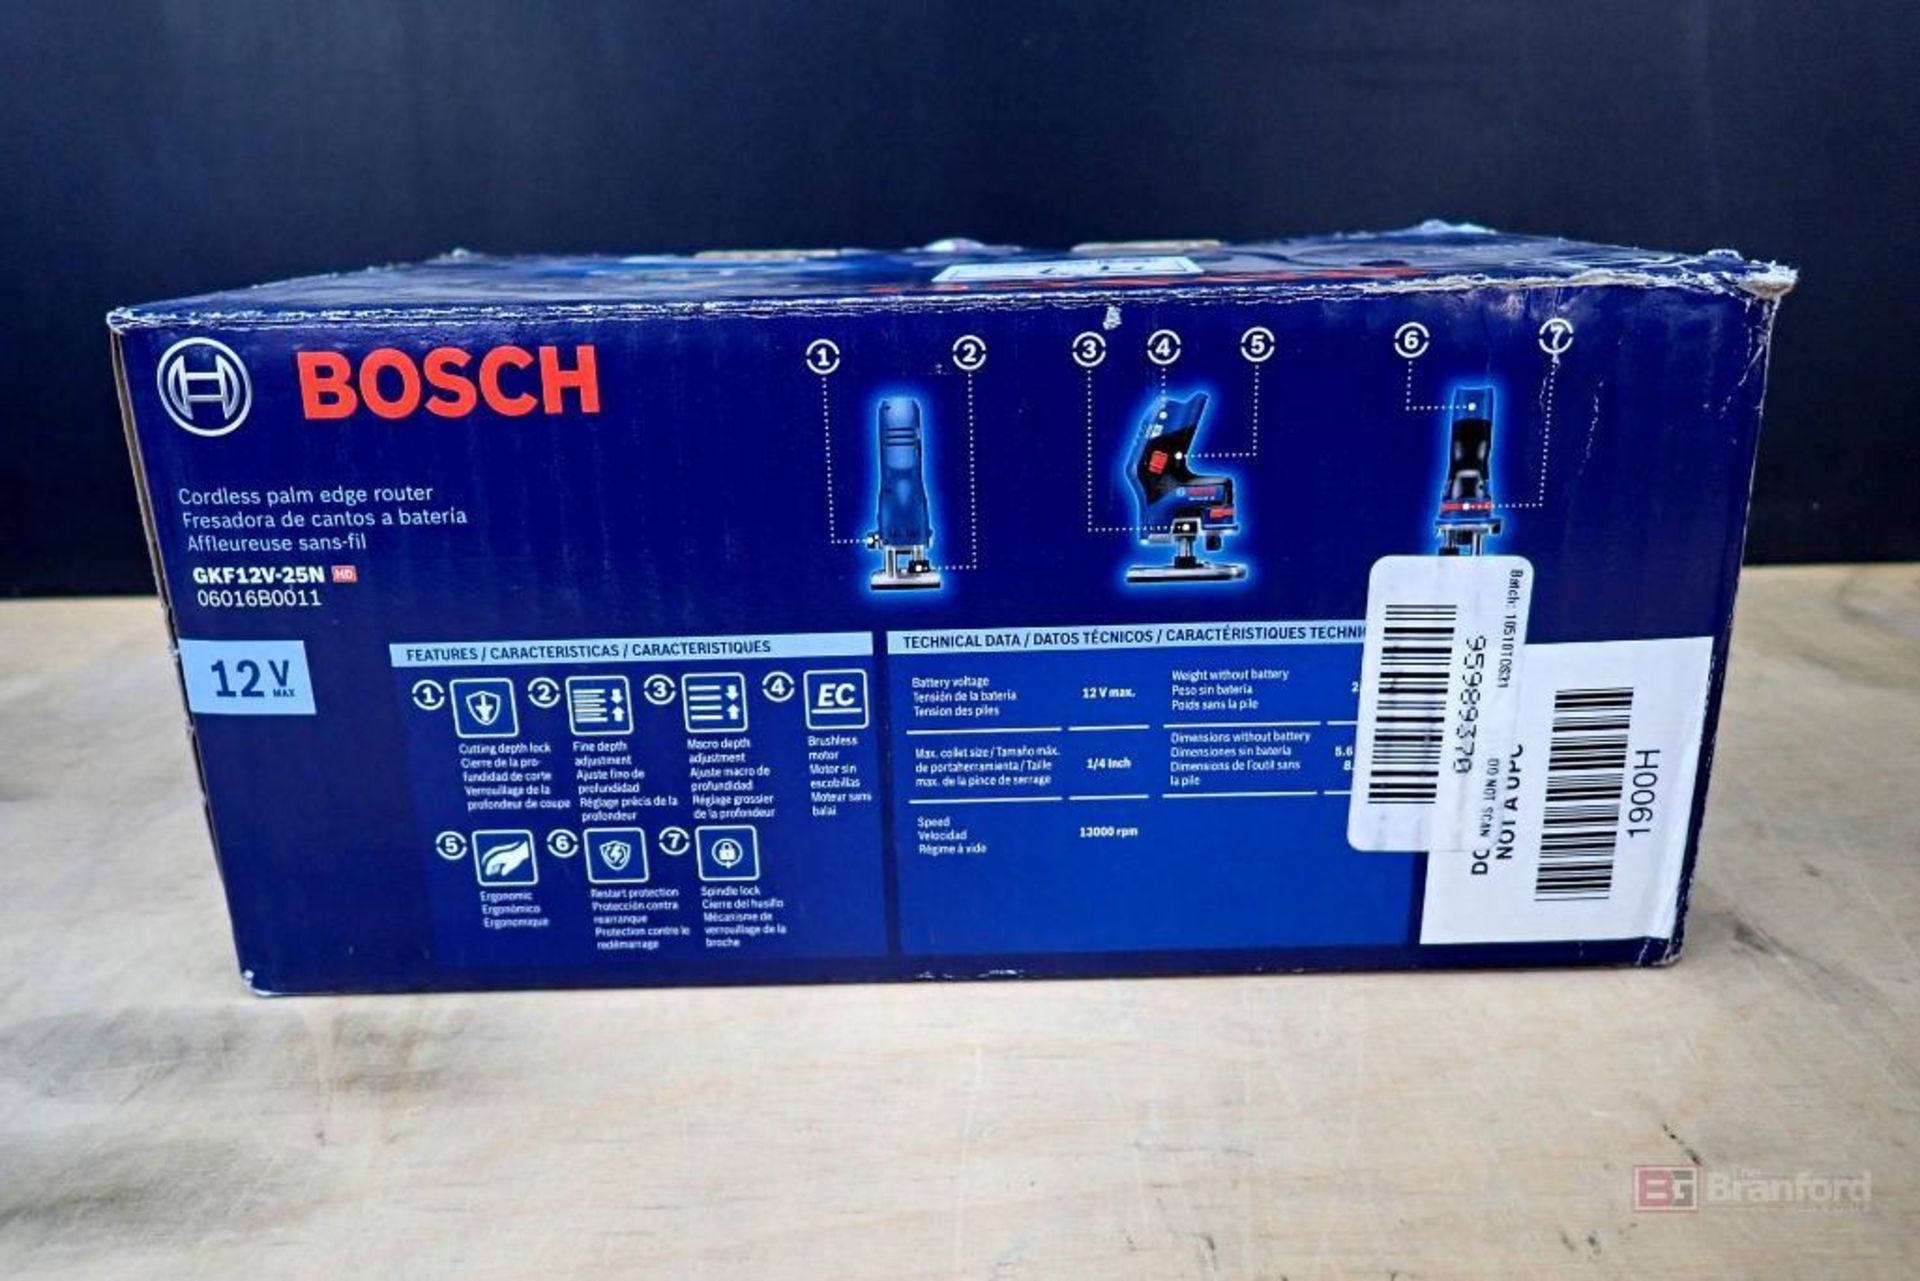 Bosch 12V Max GKF12V-25N Cordless Palm Edge Router - Image 4 of 10